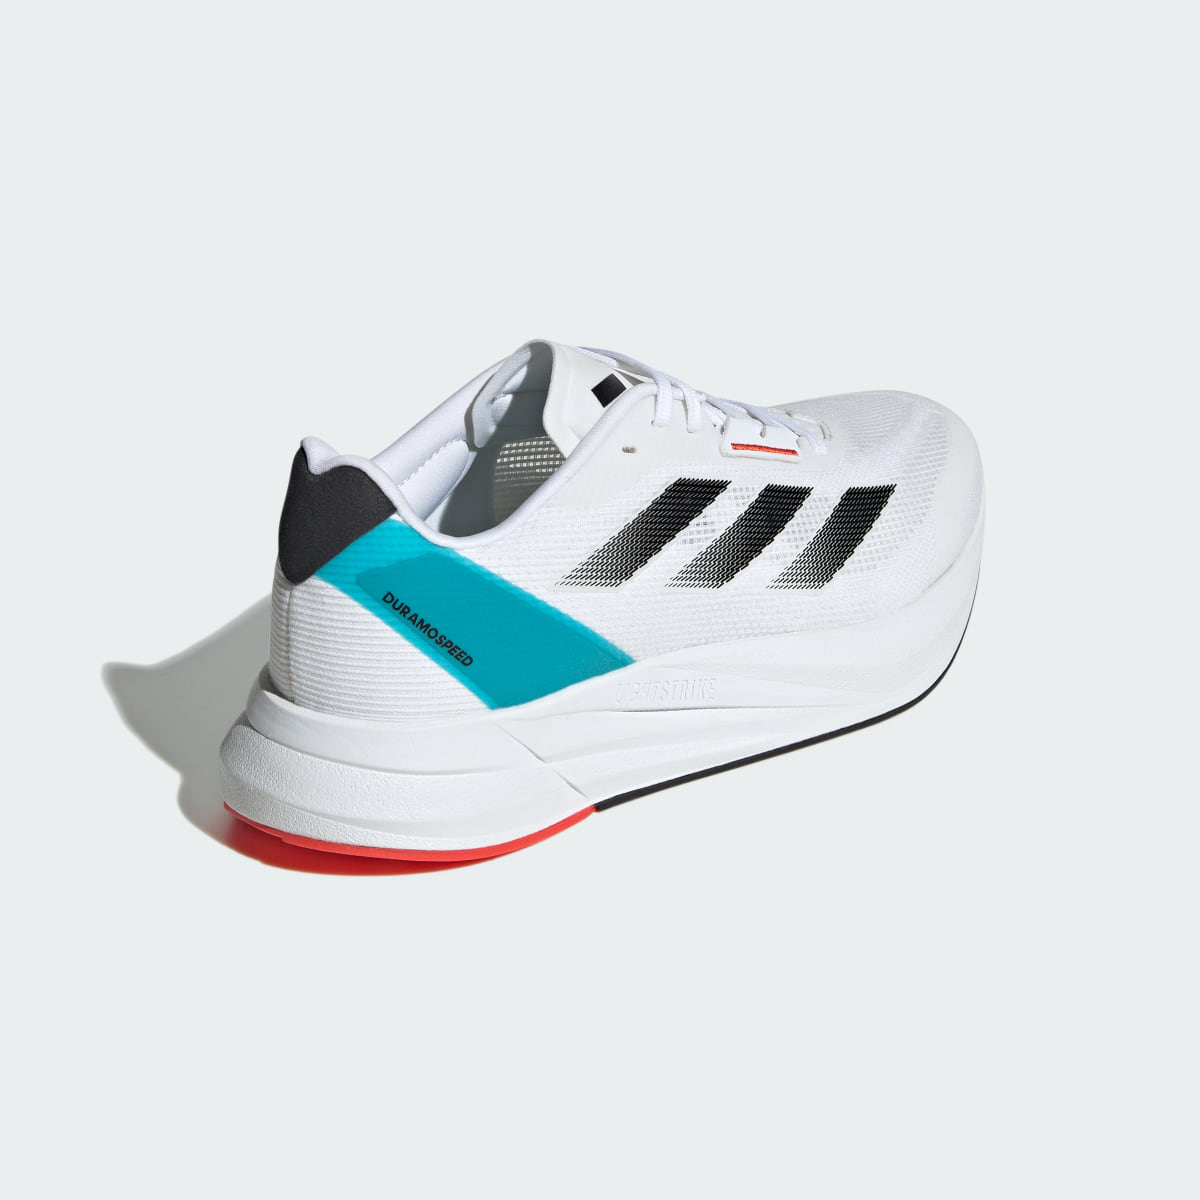 Adidas Duramo Speed Ayakkabı. 6